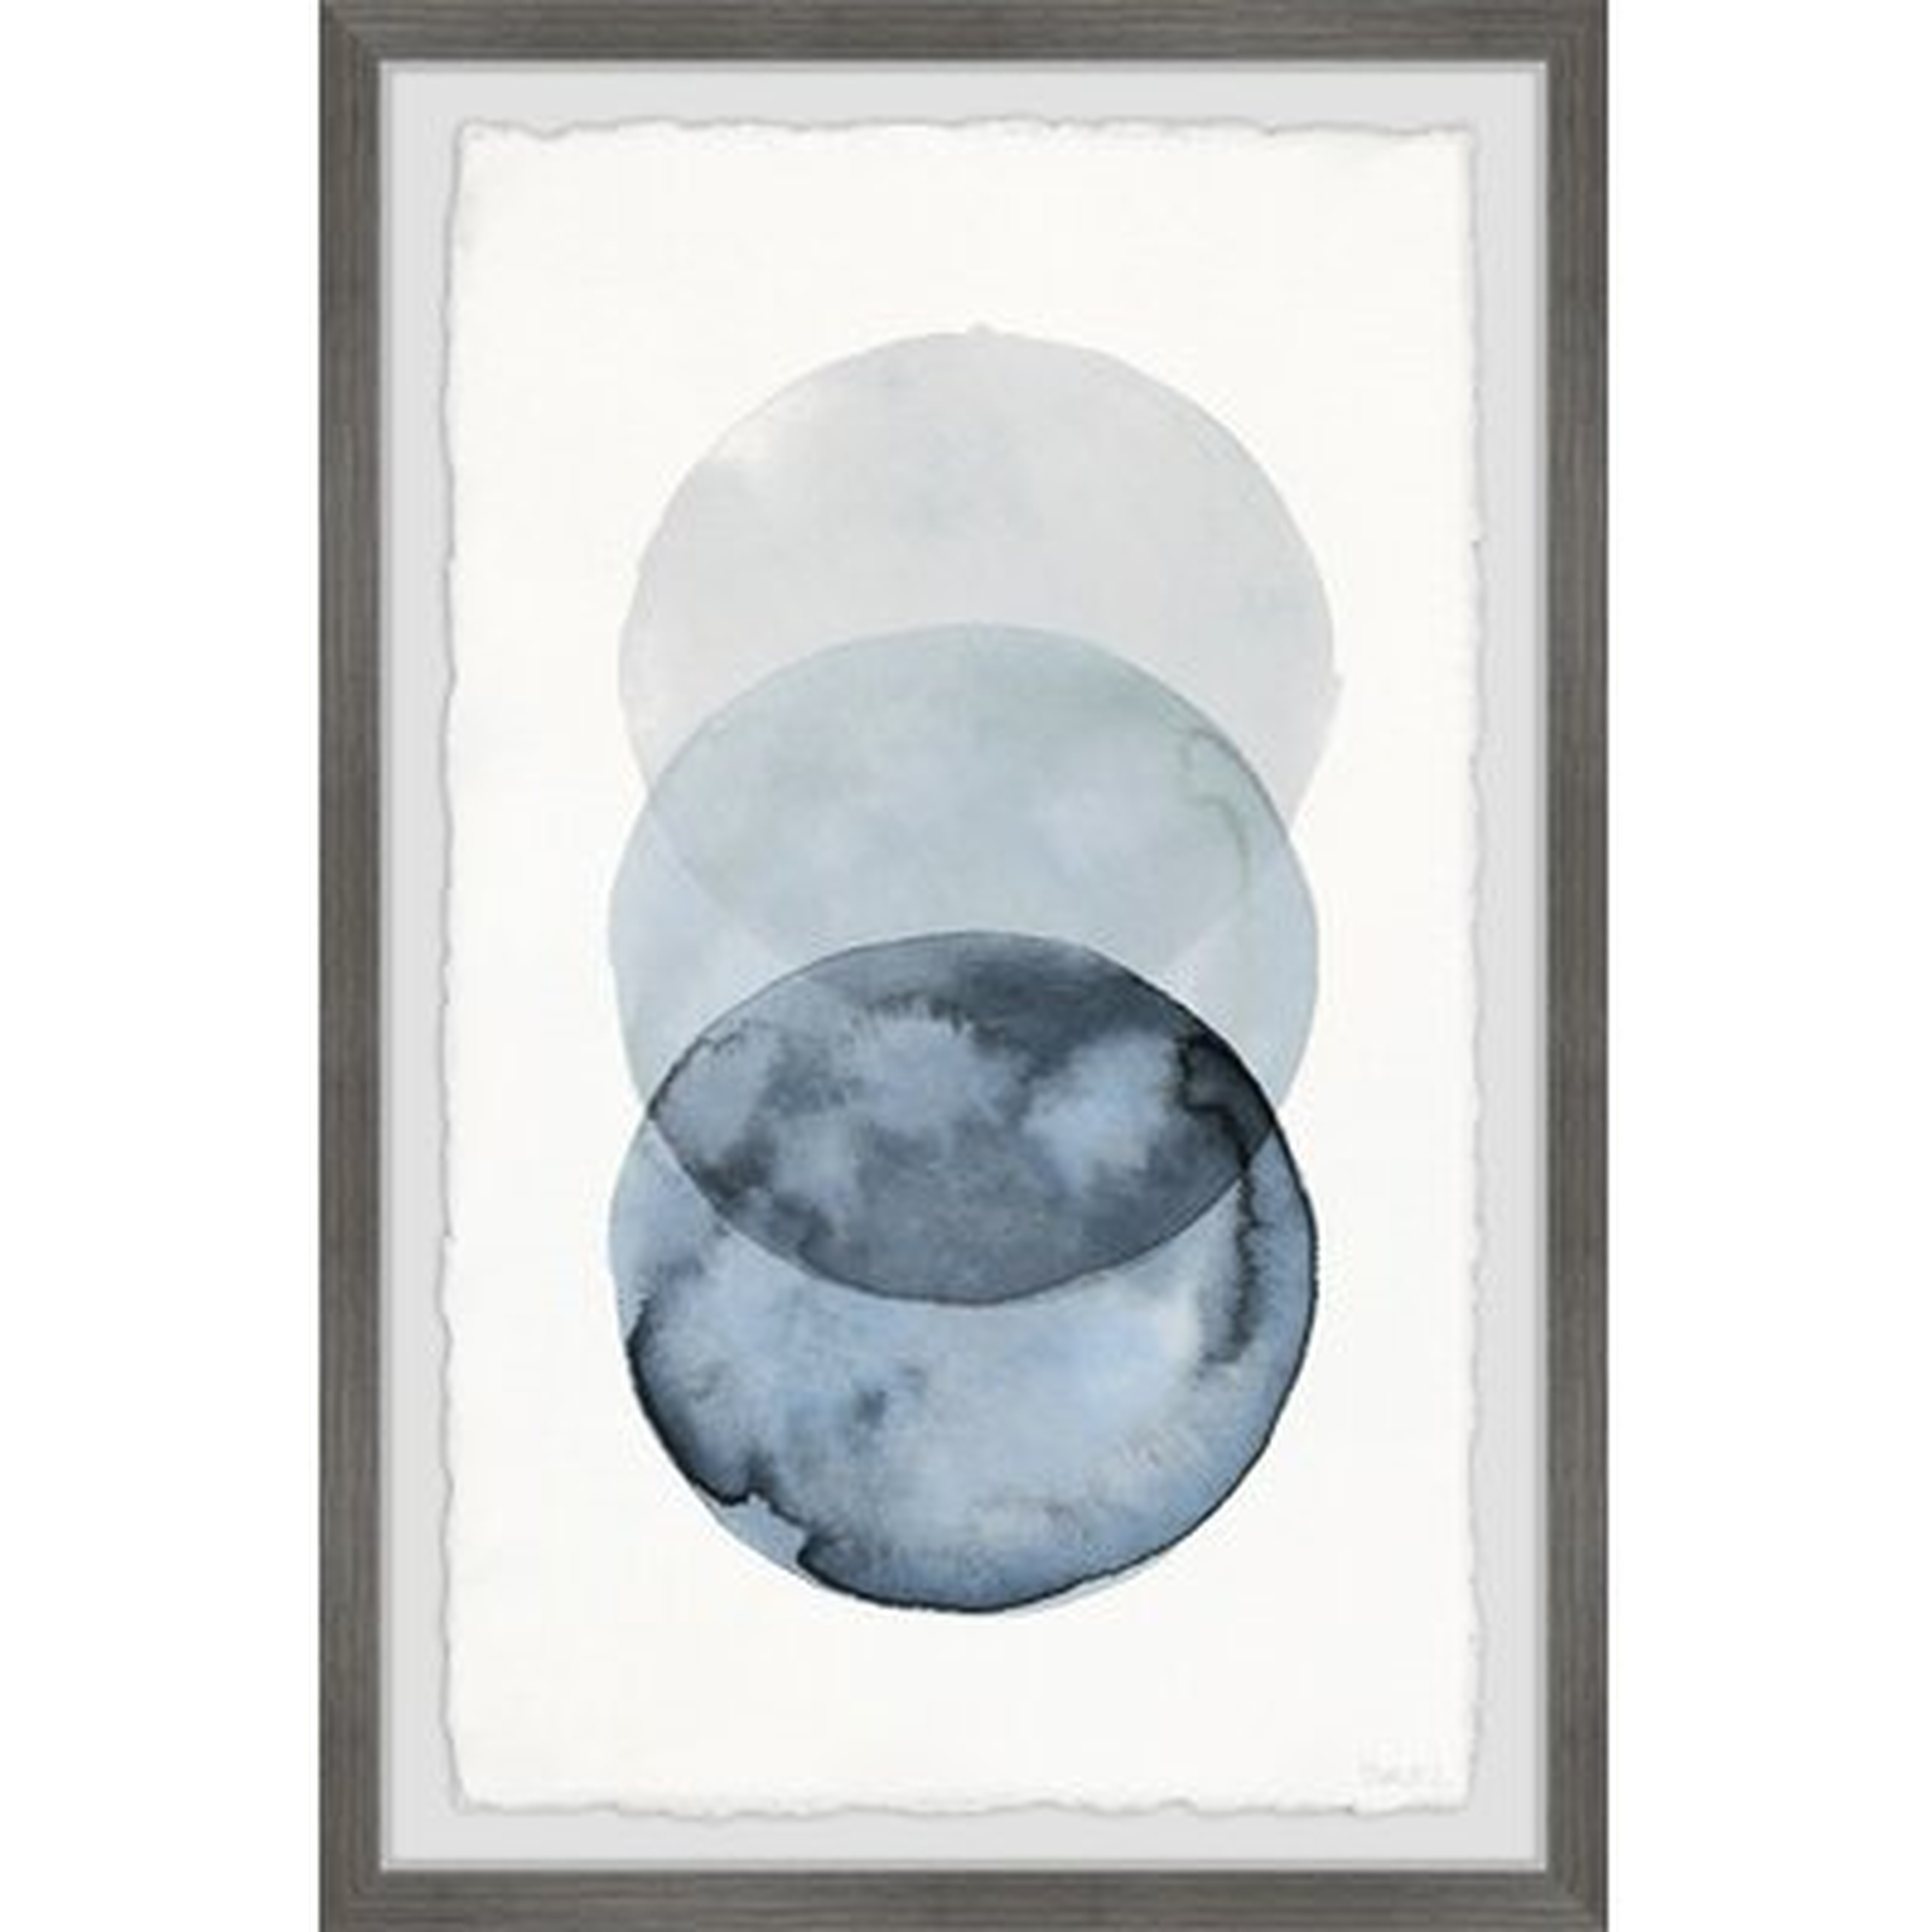 Circles Overlap by Parvez Taj - Picture Frame Print on Paper - Wayfair